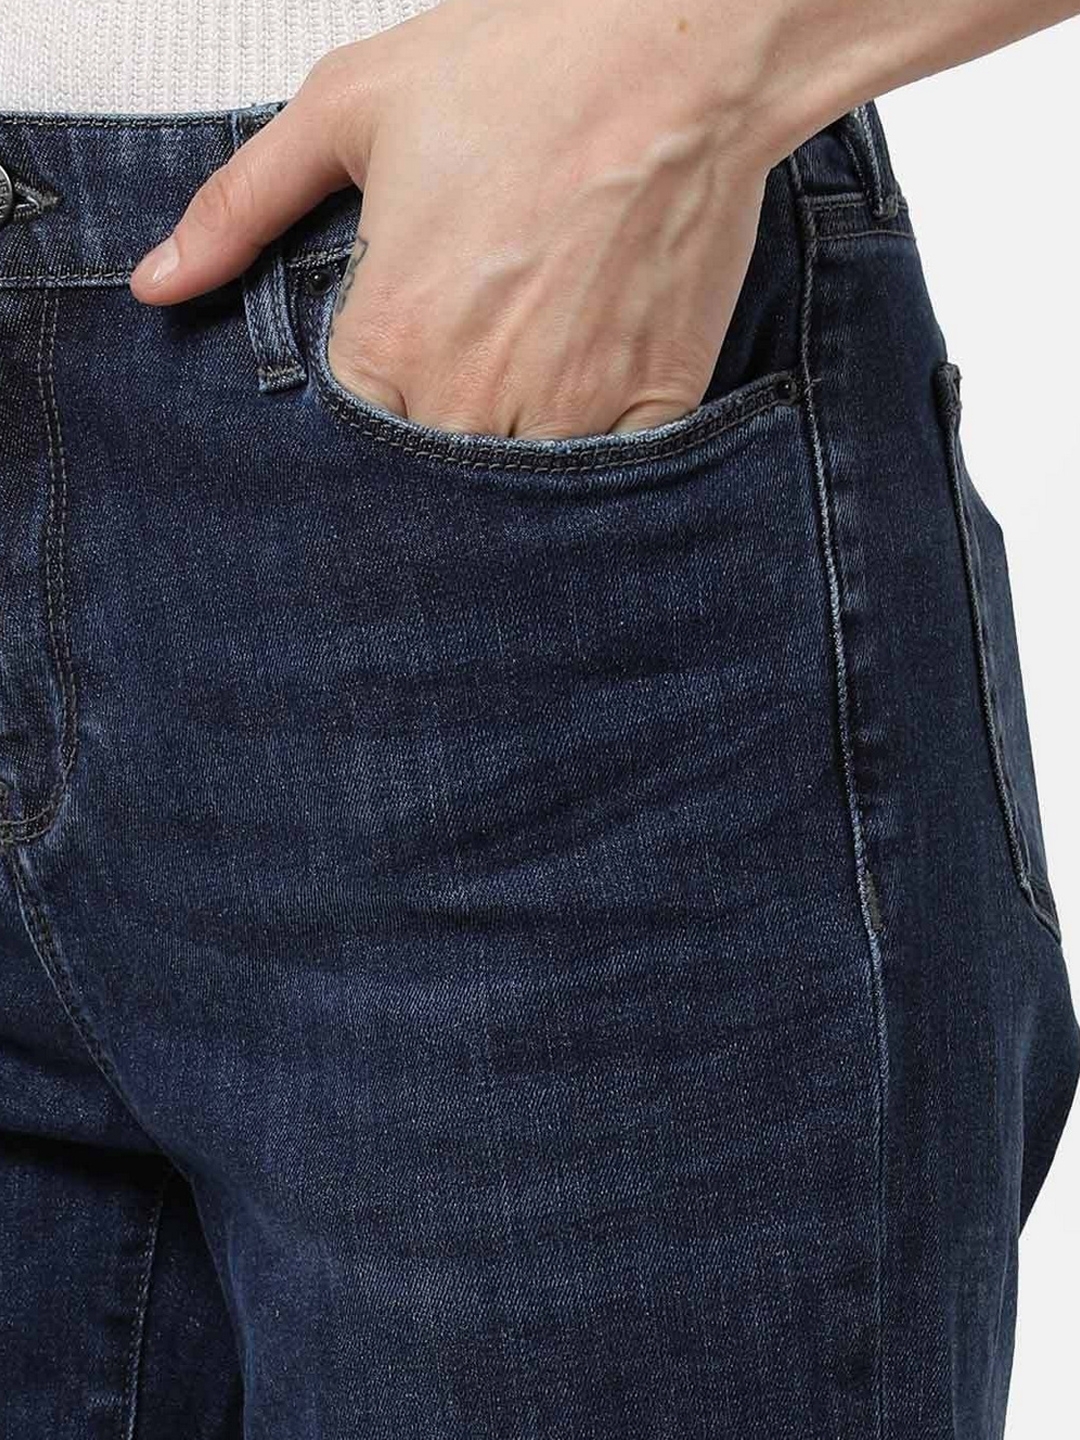 Women's Crystelle jeans